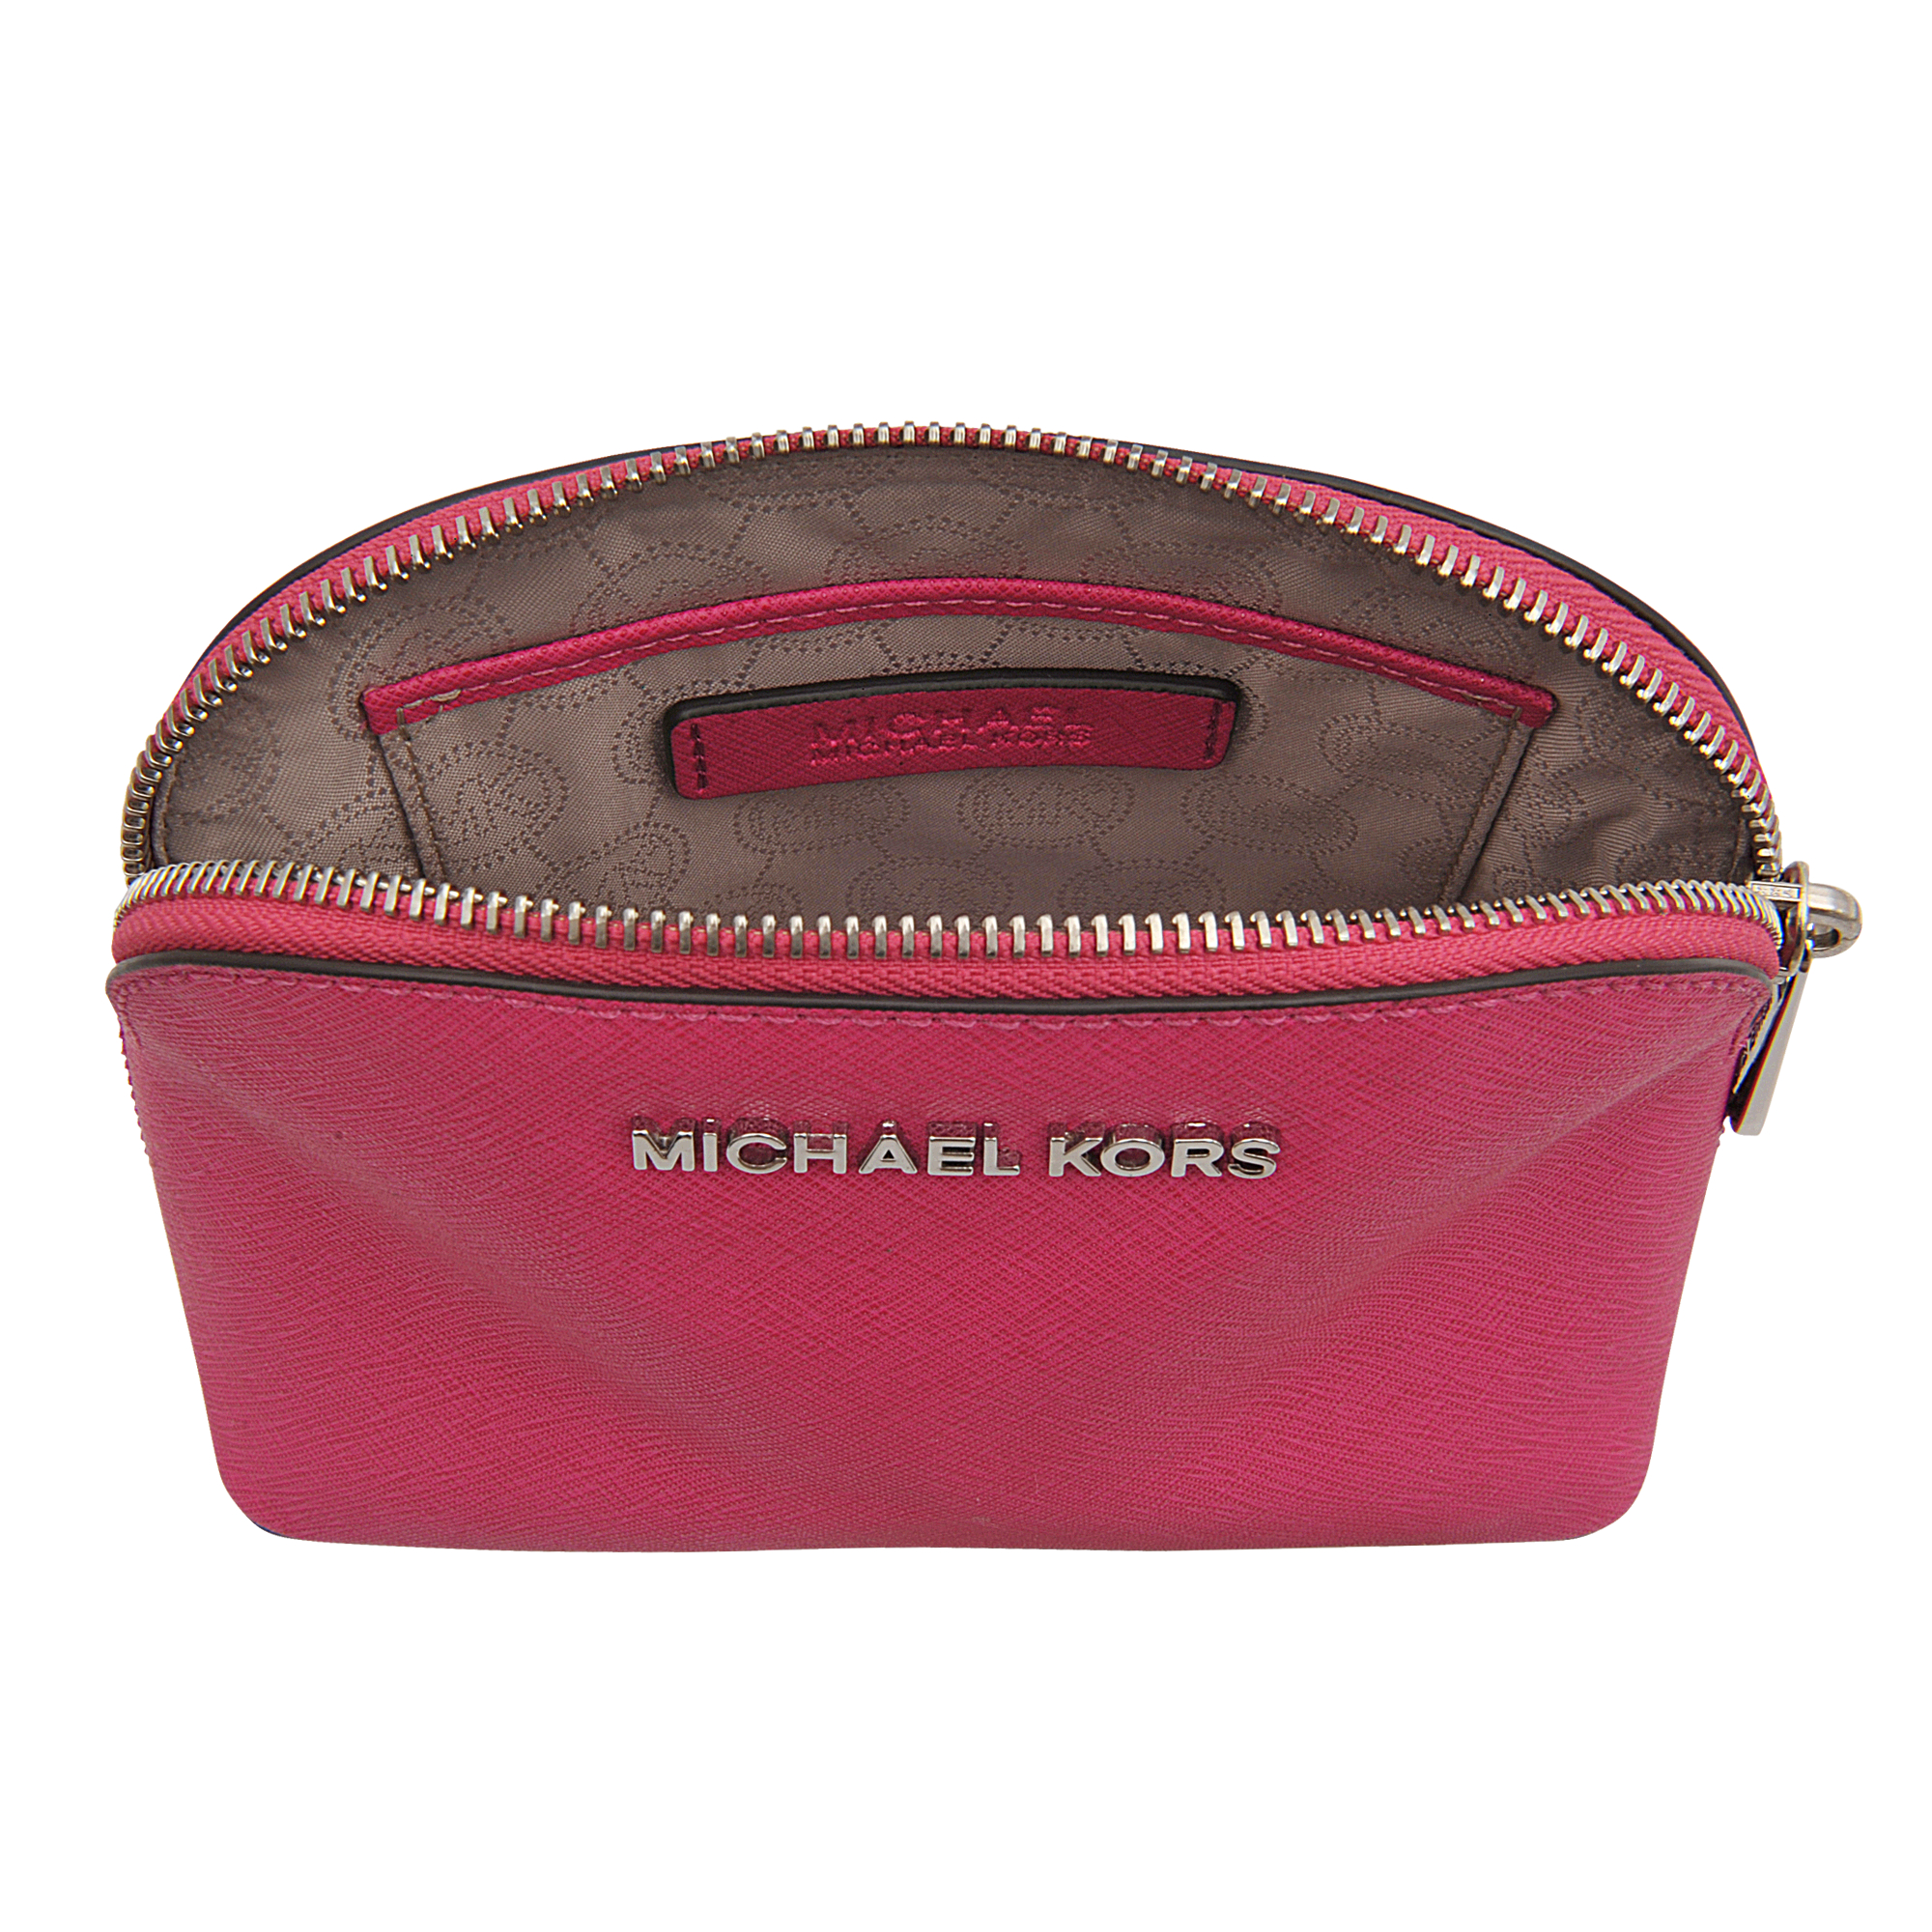 Michael Kors Cosmetics Bag Cindy 